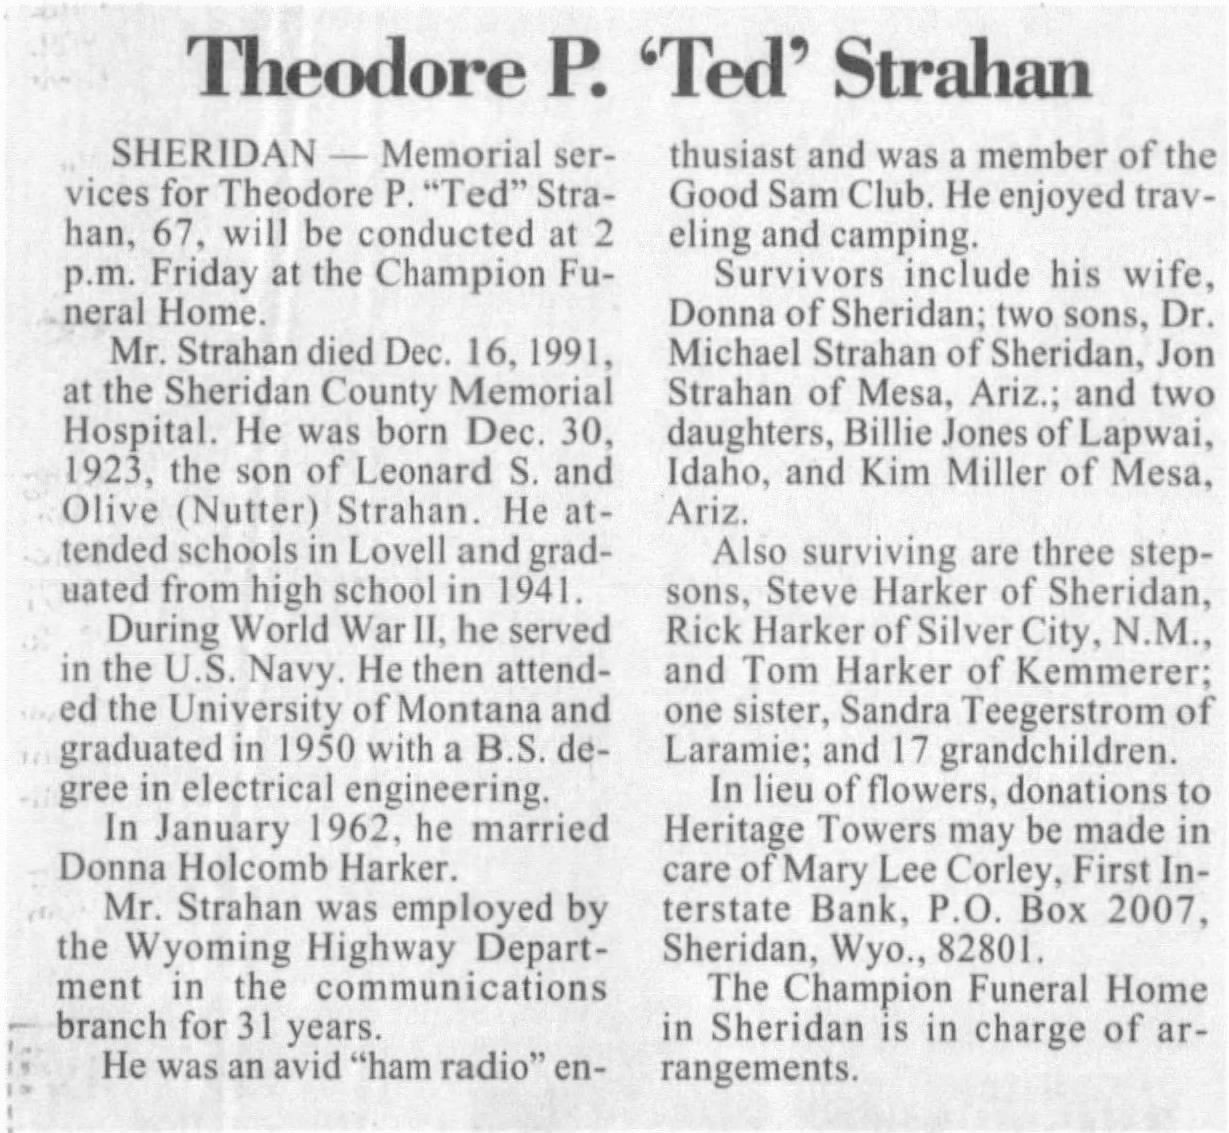 W7JID - Theodore P. 'Ted' Strahan